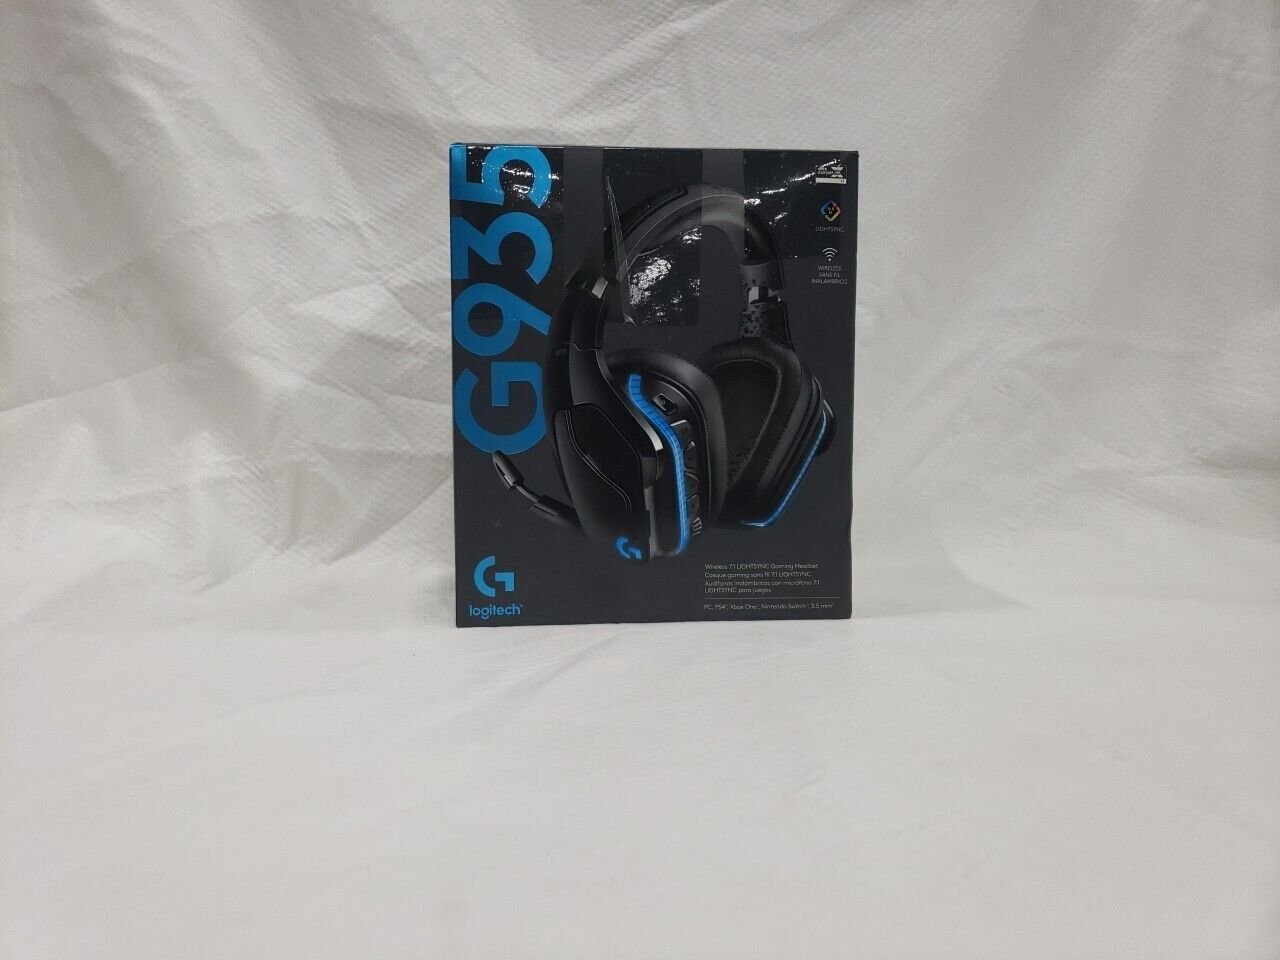 Logitech G935 Headband Gaming Headset - Black/Blue